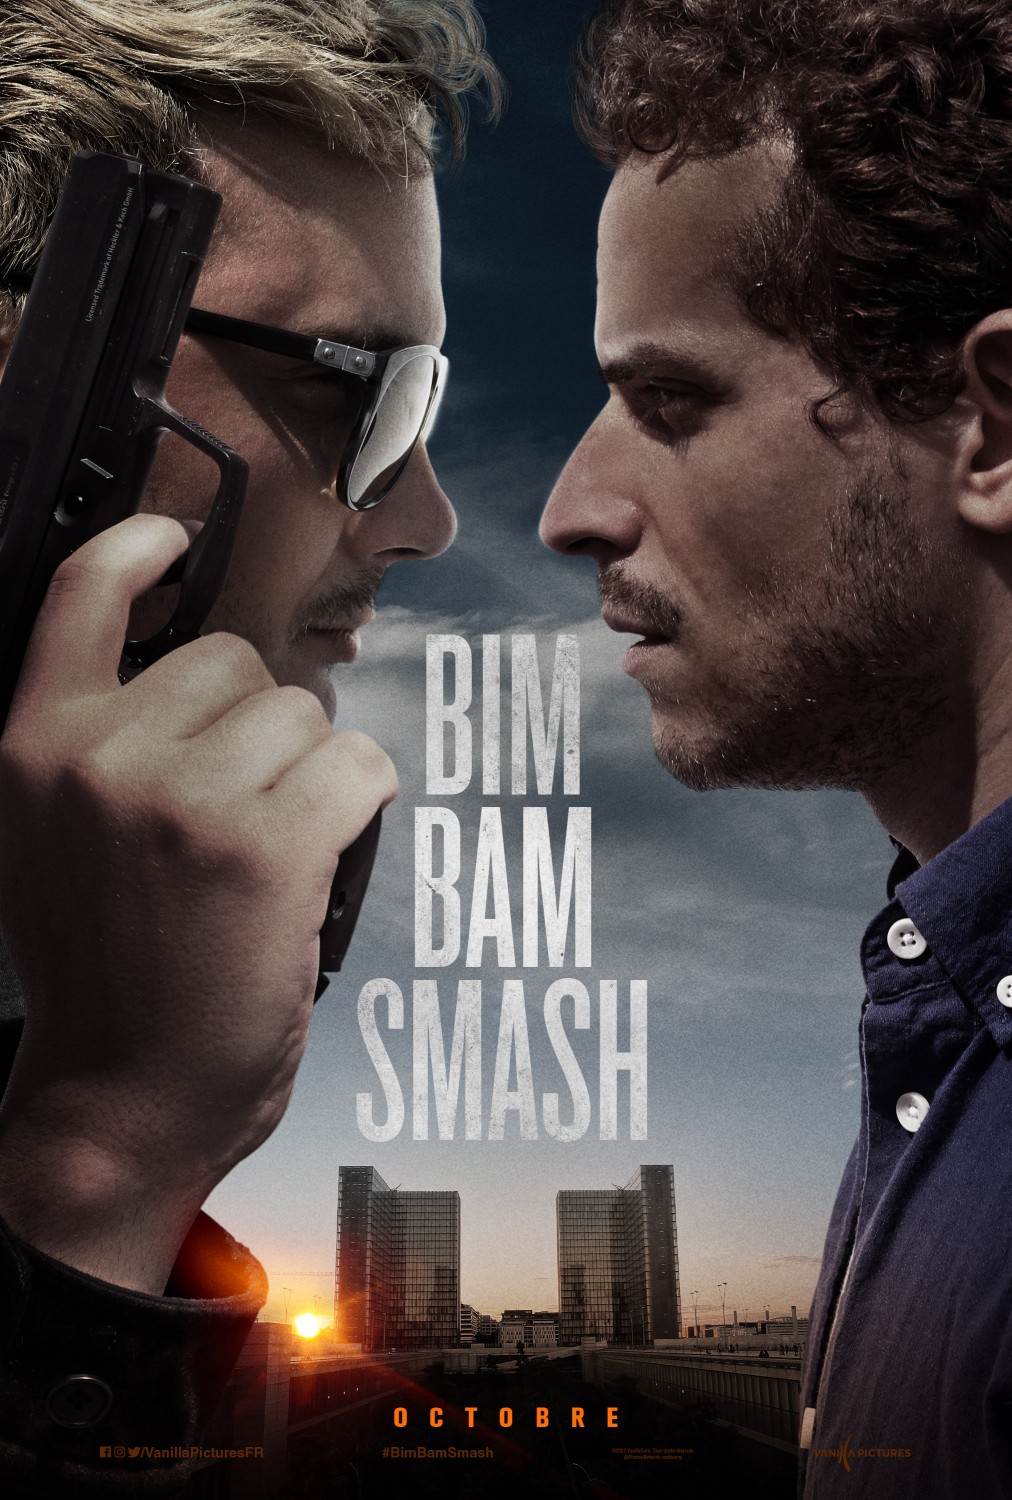 Extra Large Movie Poster Image for Bim Bam Smash